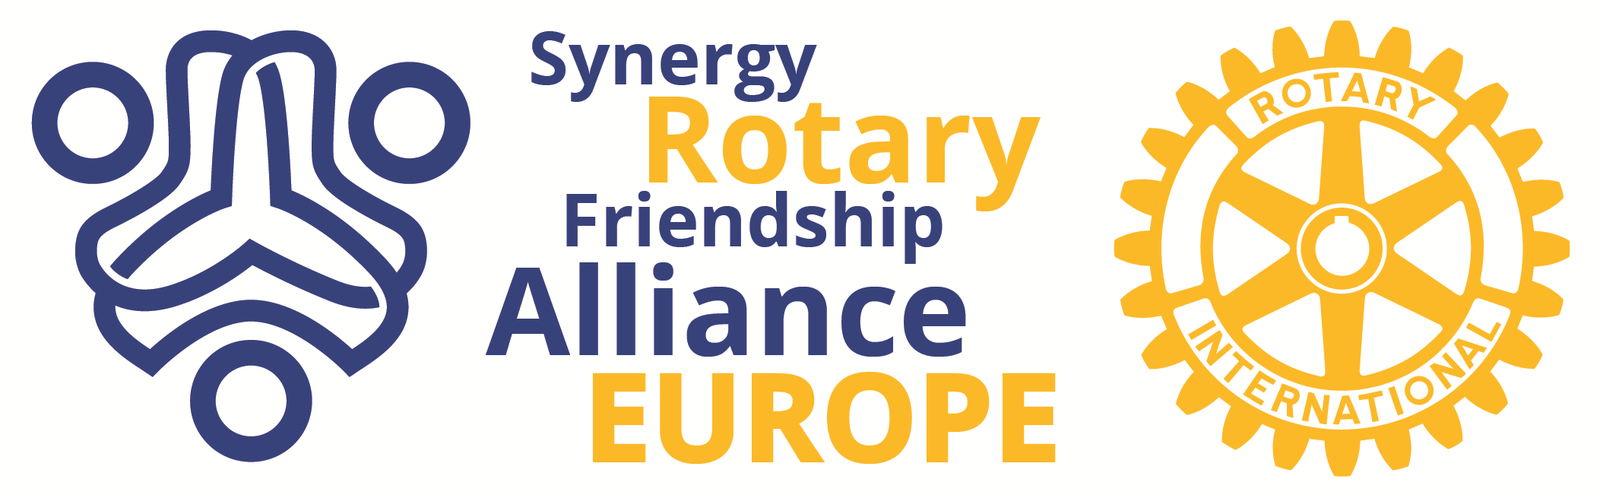 2021, synergy, europa, friendship alliance